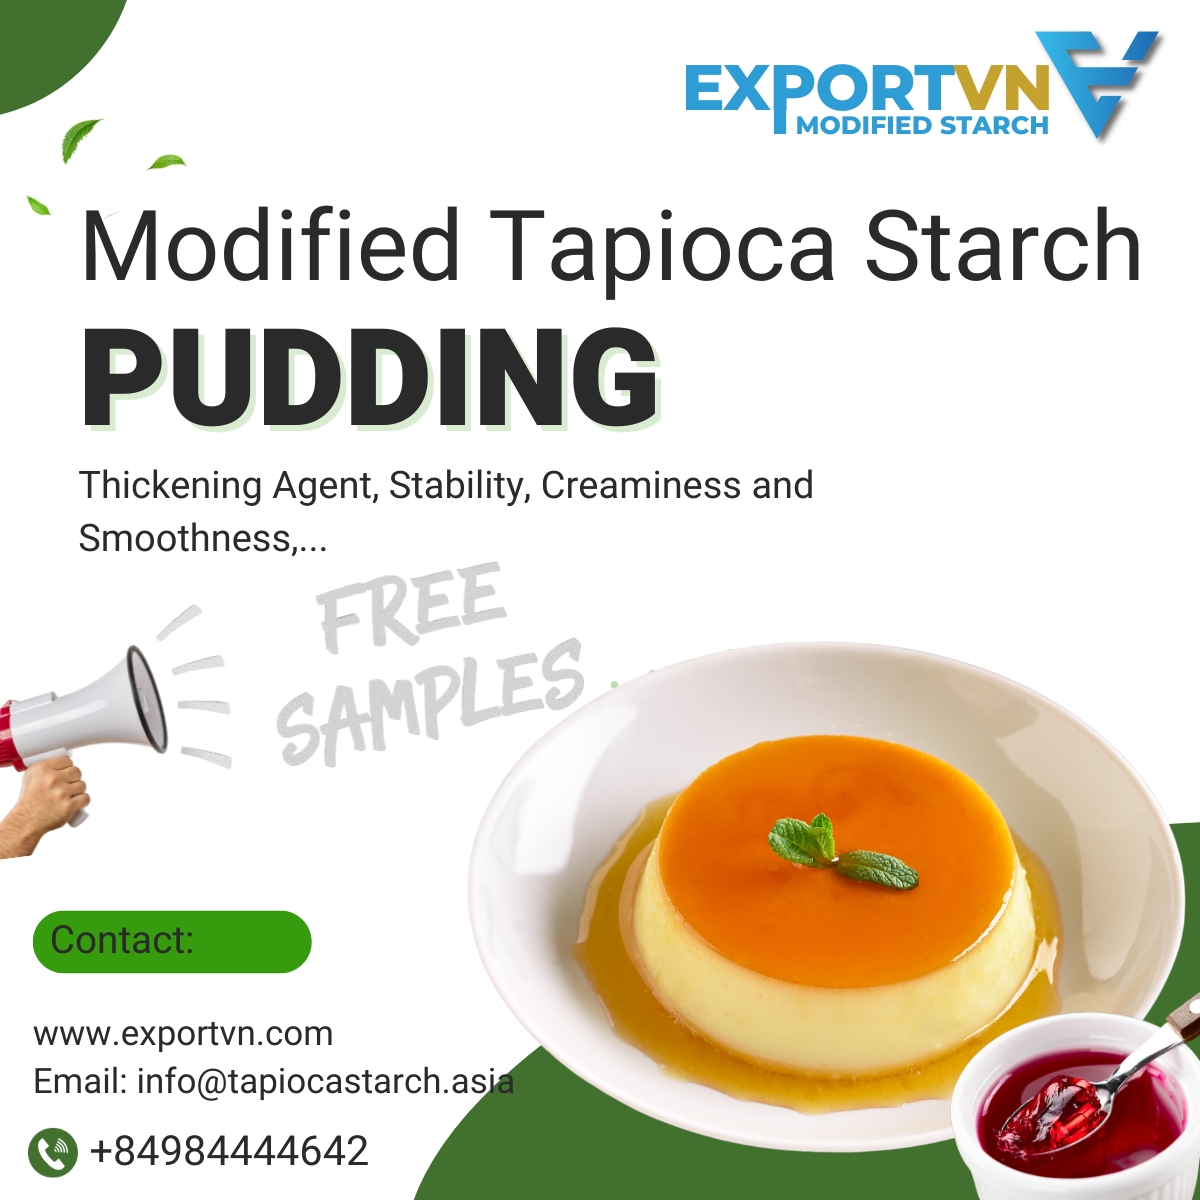 🍮 WHAT TYPE OF MODIFIED STARCH IS USED FOR PUDDING PRODUCTION?

📨 Email: info@tapiocastarch.asia
📞 WhatsApp: +84984444642

#EXPORTVN #Tapioca #TapiocaStarch #GlutenFree #Cassava #Pudding #TapiocaRecipes #TapiocaFlour #DistarchPhosphate #WaxyMaize #SweetPotato #E1442 #E1422